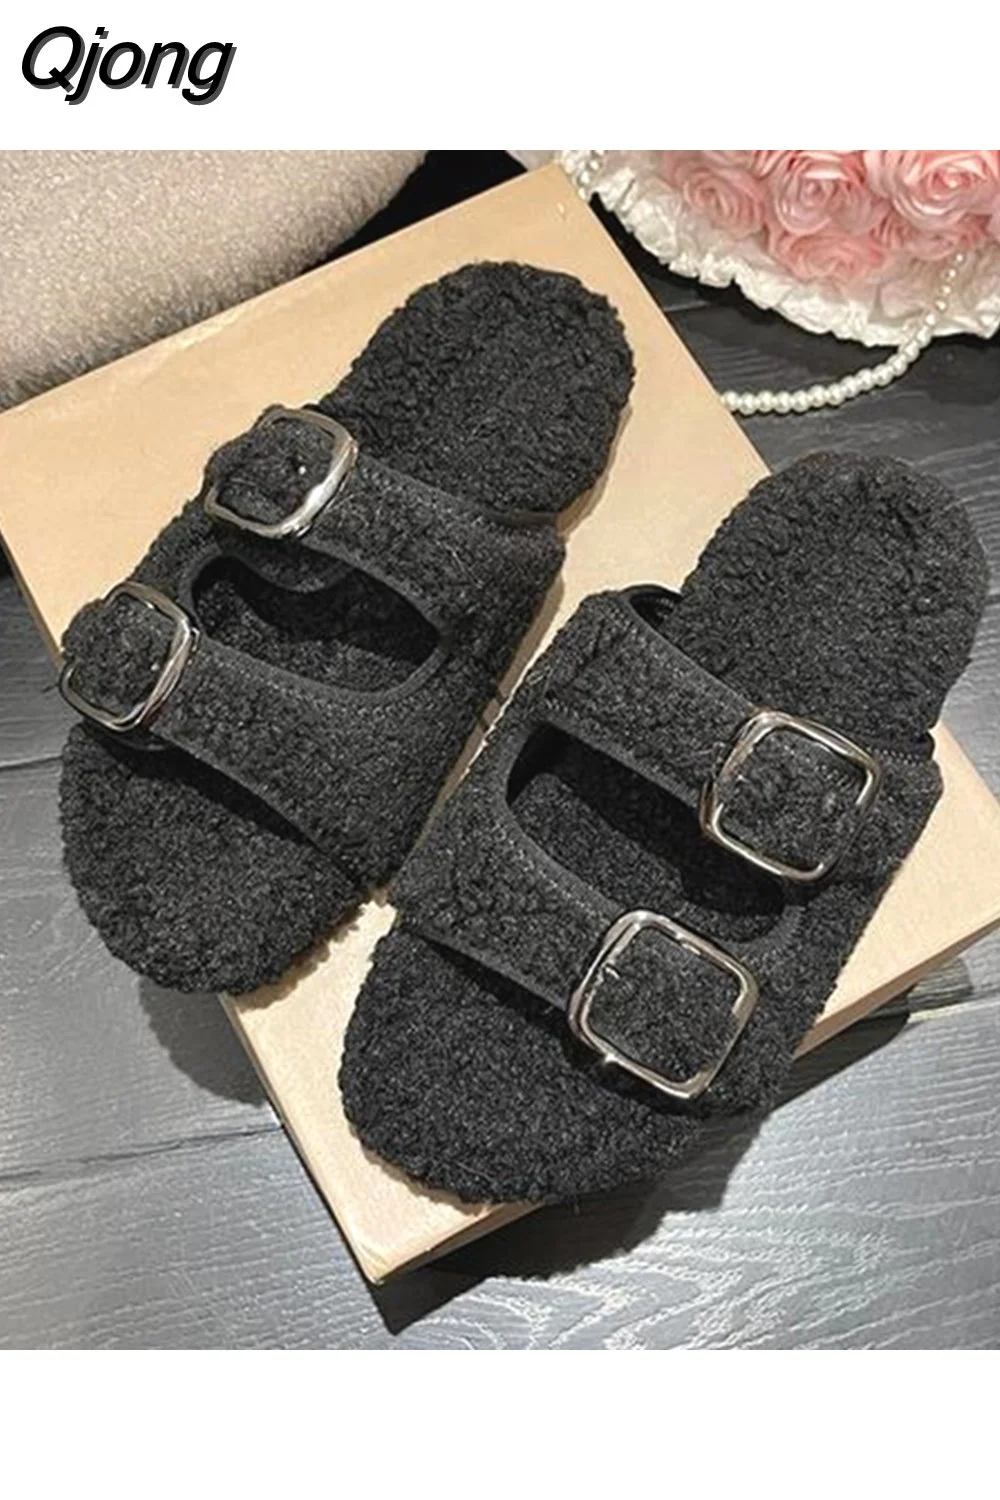 Qjong Shoes Luxury Sandals Summer Heels Espadrilles Platform Buckle Strap Suede Fashion Girls Outside Low High Fur Clogs Slippe